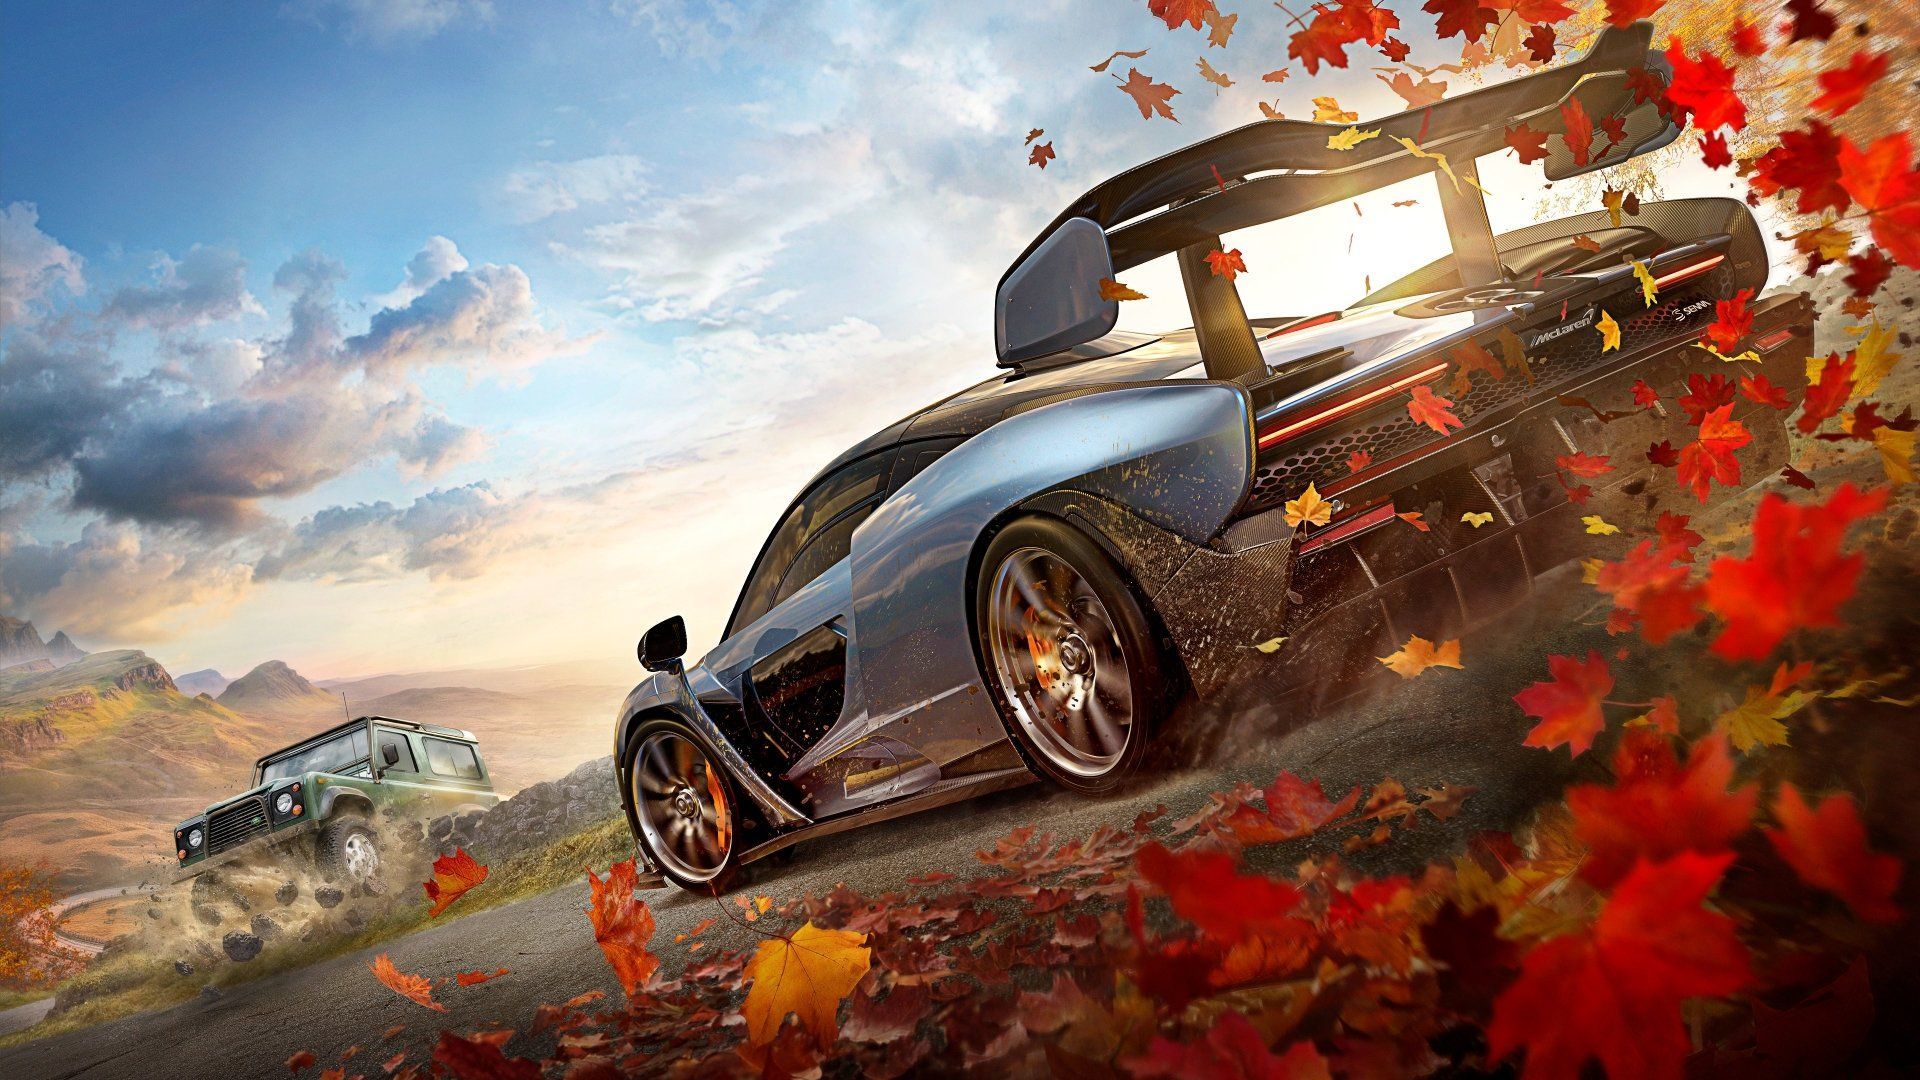 Forza Horizon 5 HD Wallpapers